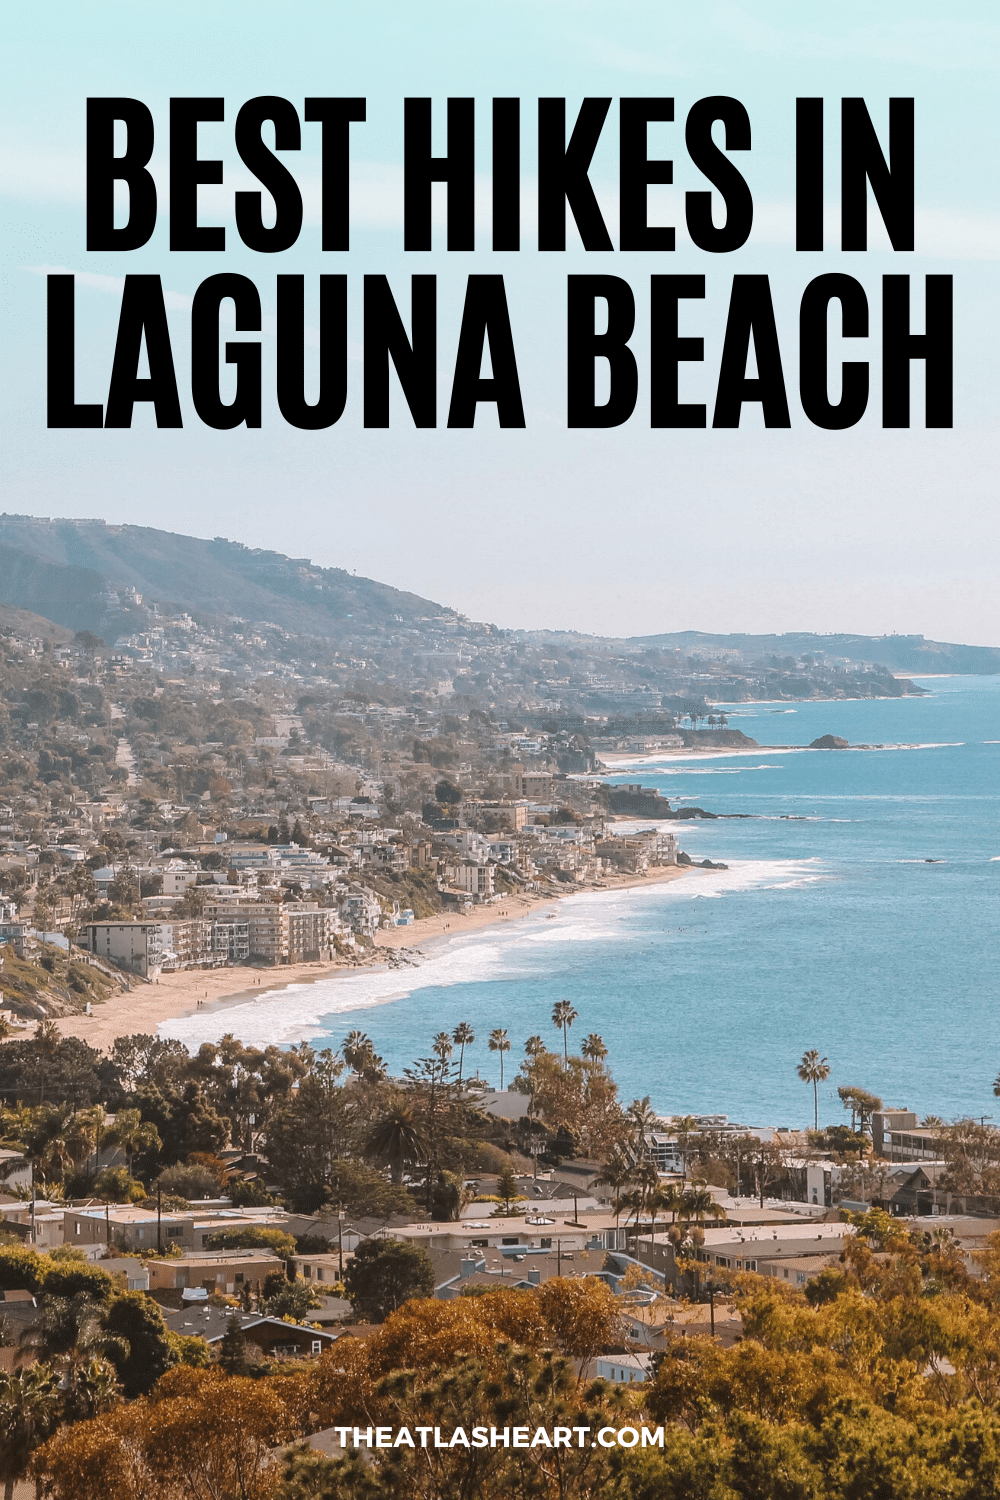 Hiking in Laguna Beach: 9 Best Hikes in Laguna Beach, California